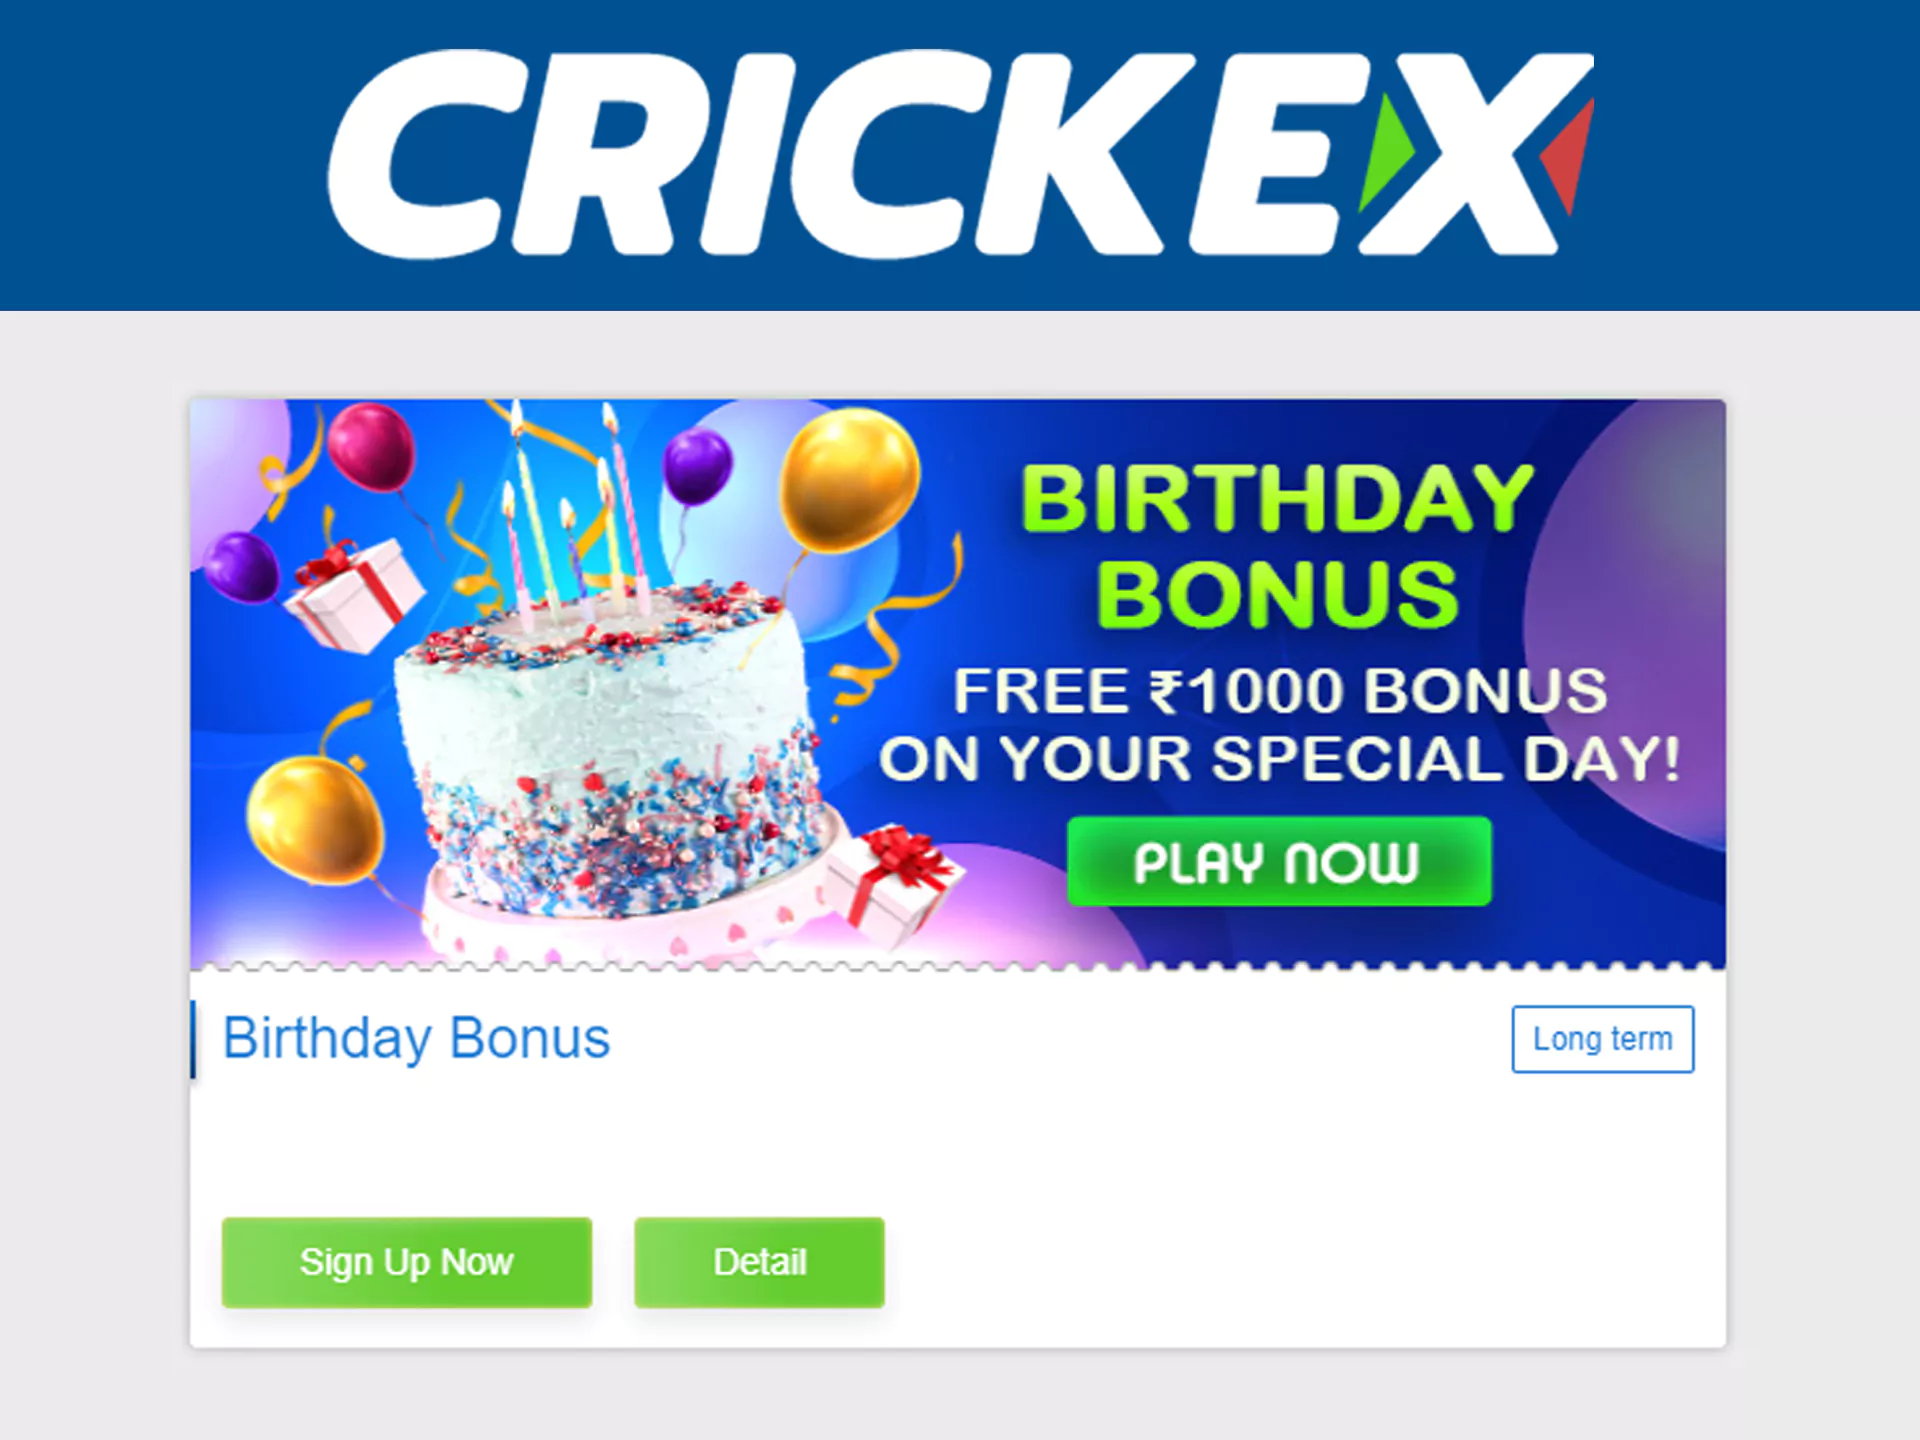 Get Birthday bonus when you celebrate it.